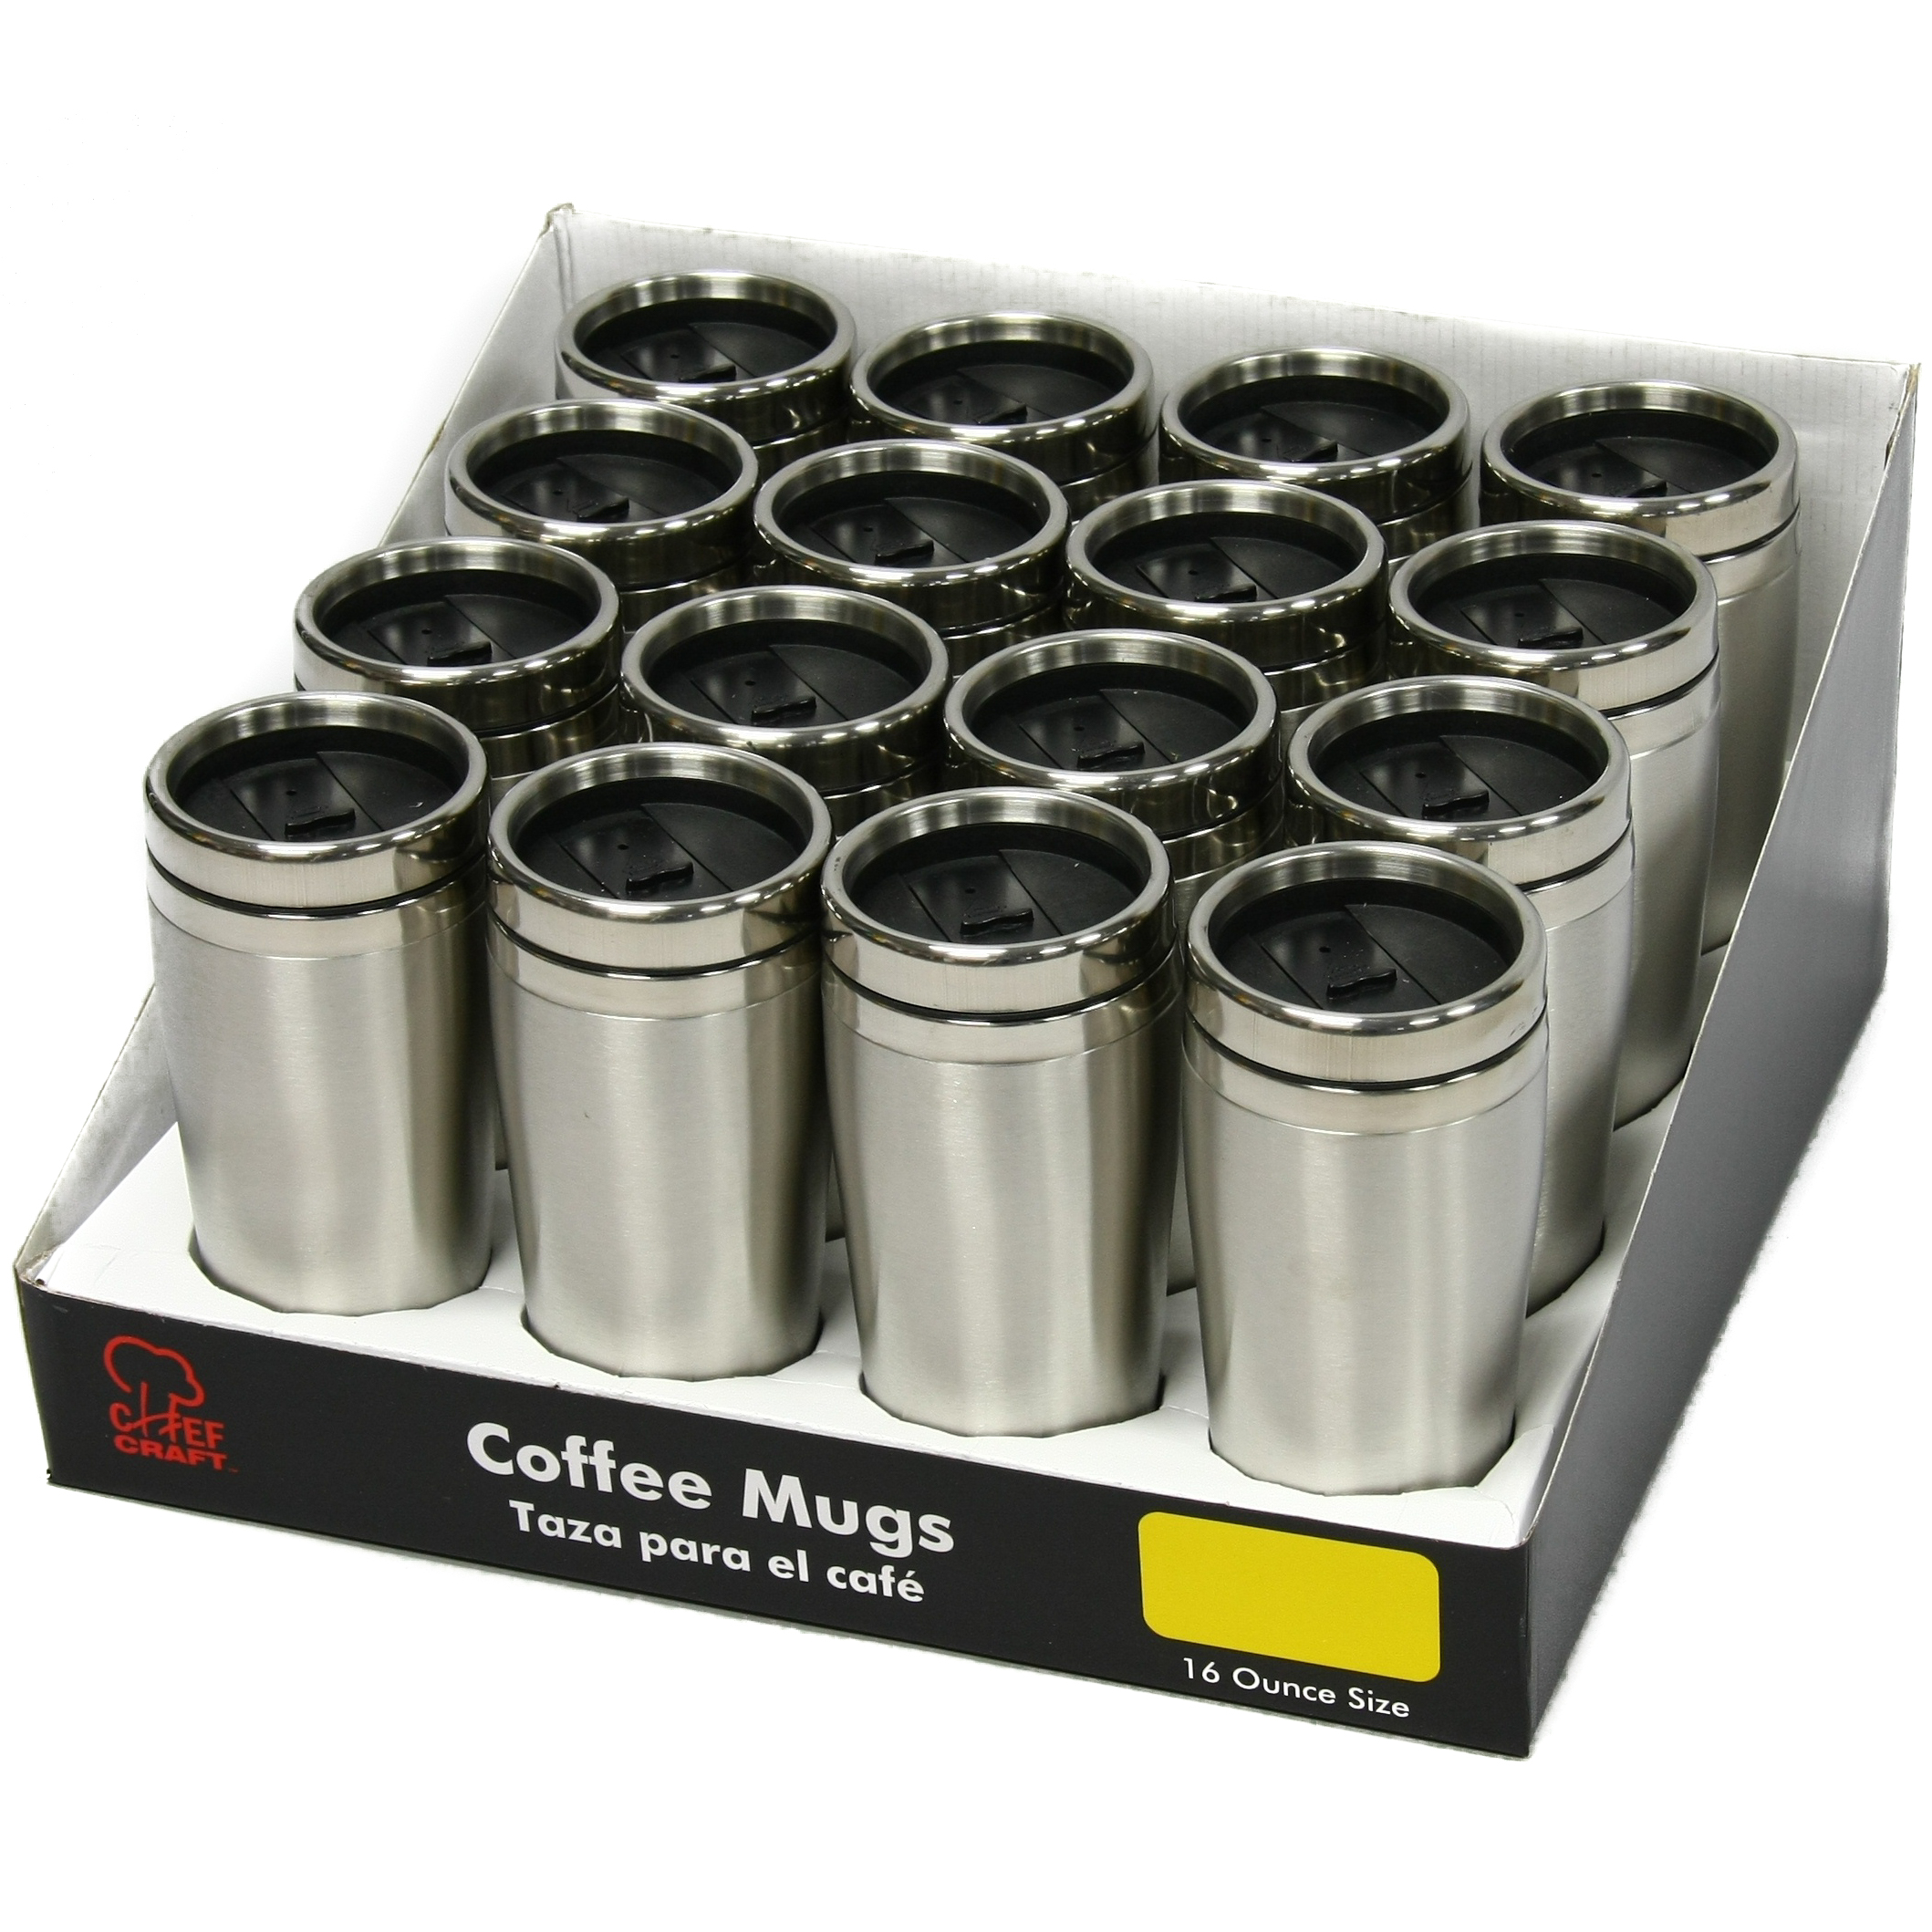 16 oz. Stainless Steel COFFEE Mugs PDQ in Shelf Display